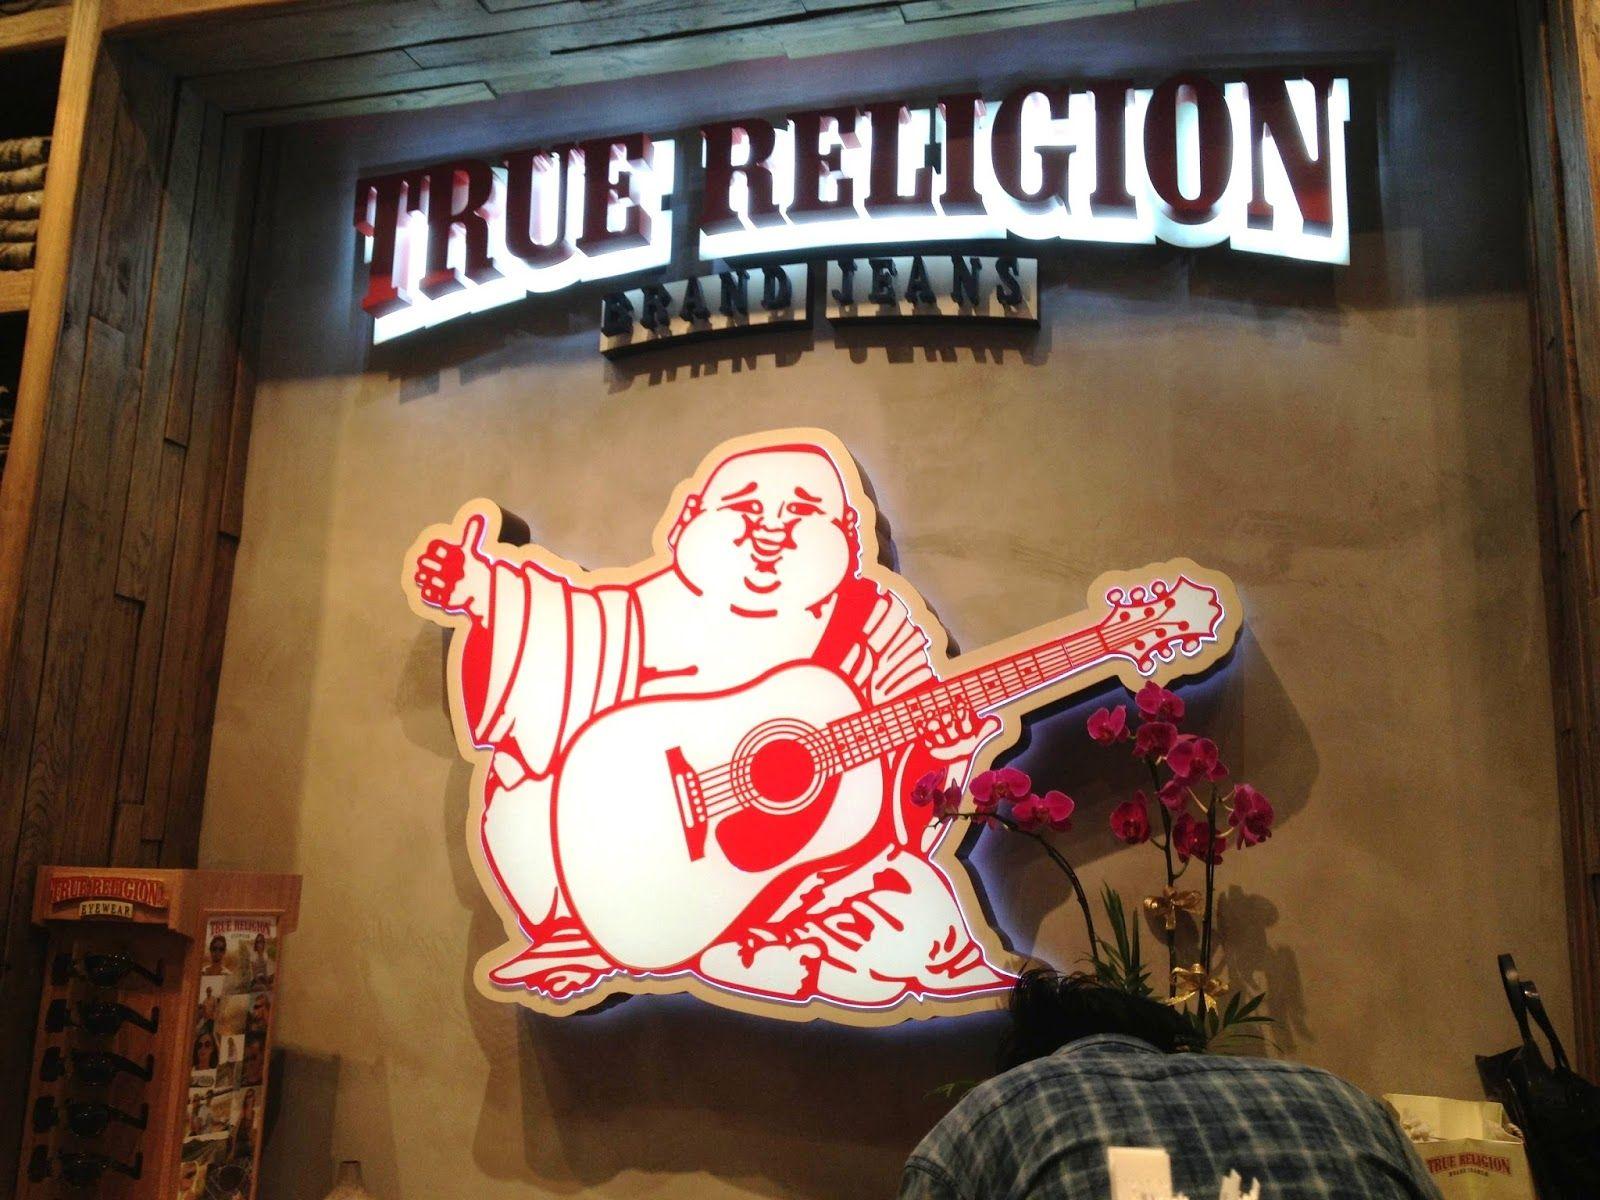 Download True Religion Wallpaper Gallery